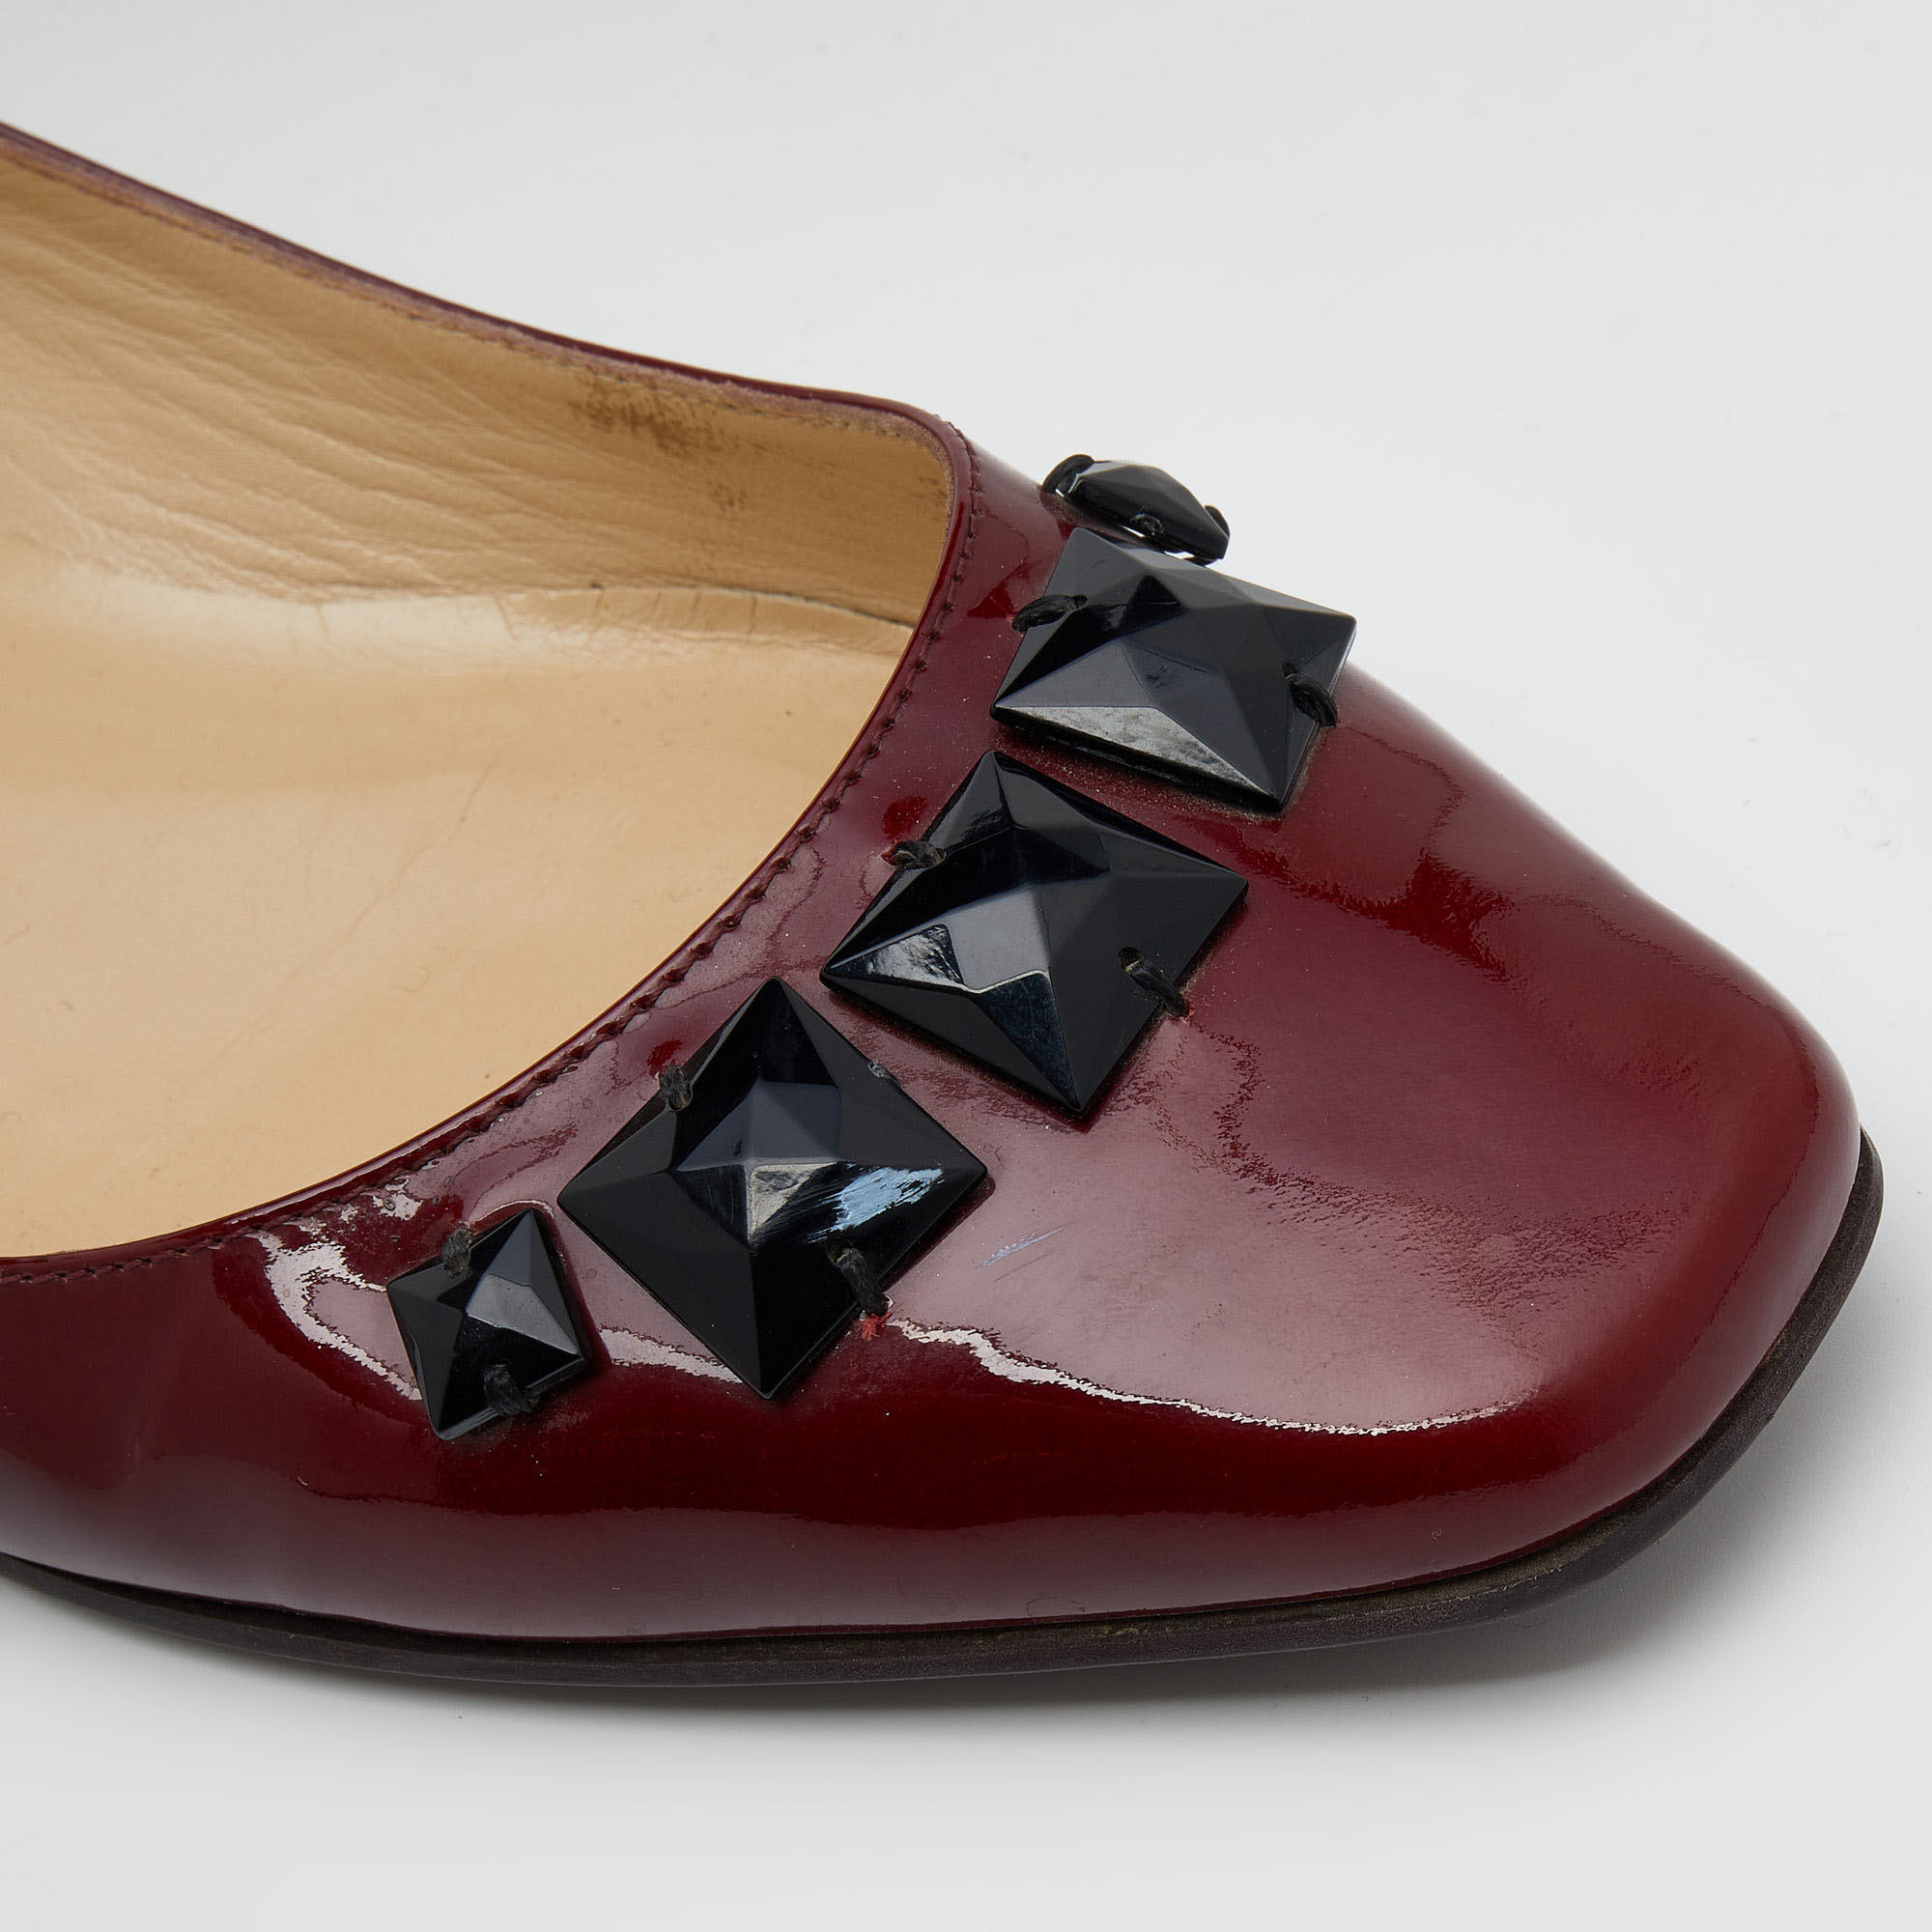 Jimmy Choo Burgundy Patent Leather Crystal Embellished Watson Ballet Flats Size 37.5